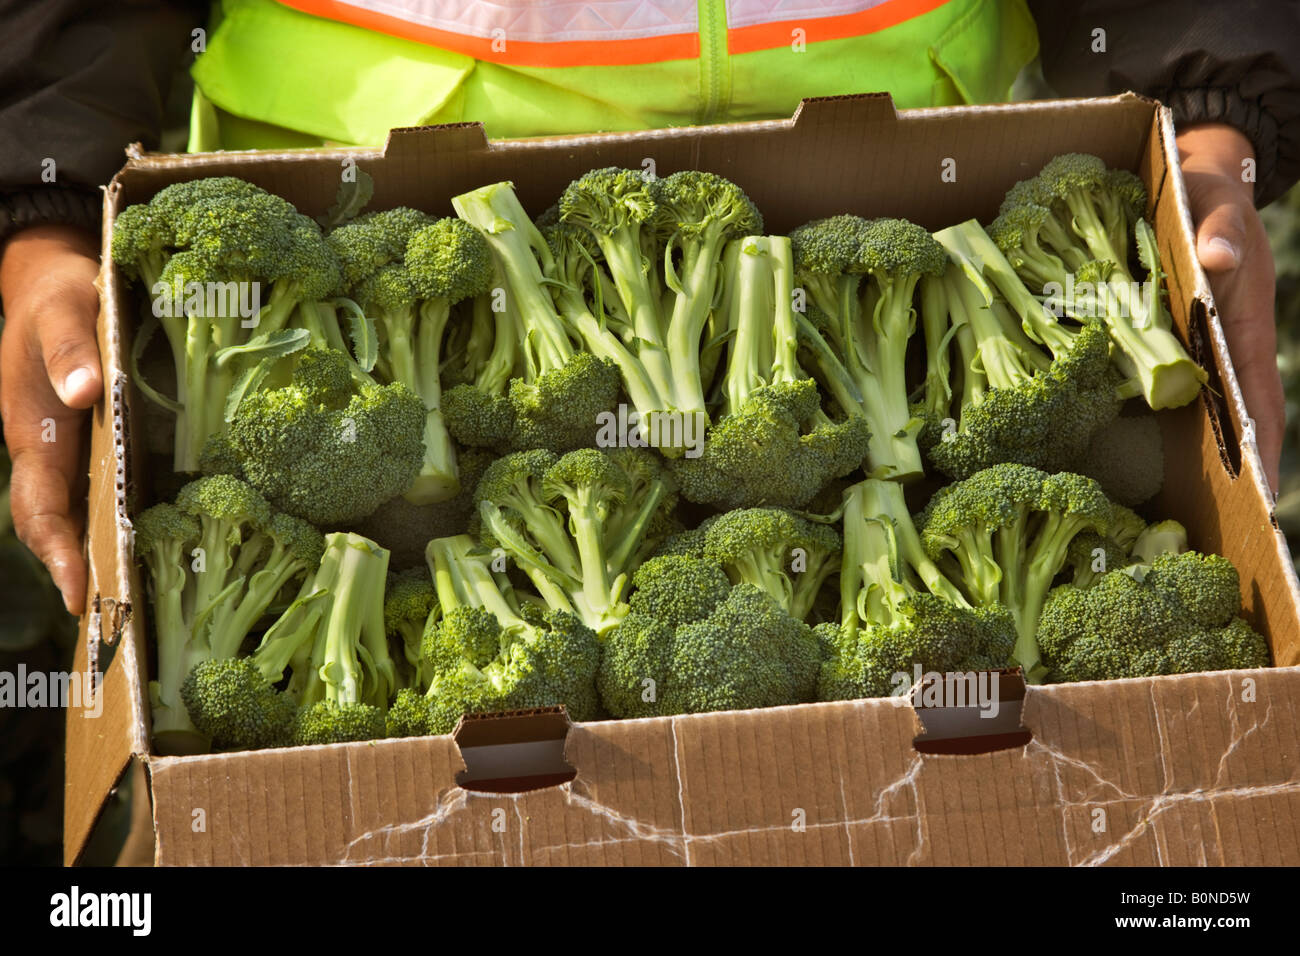 Broccoli crowns. Stock Photo